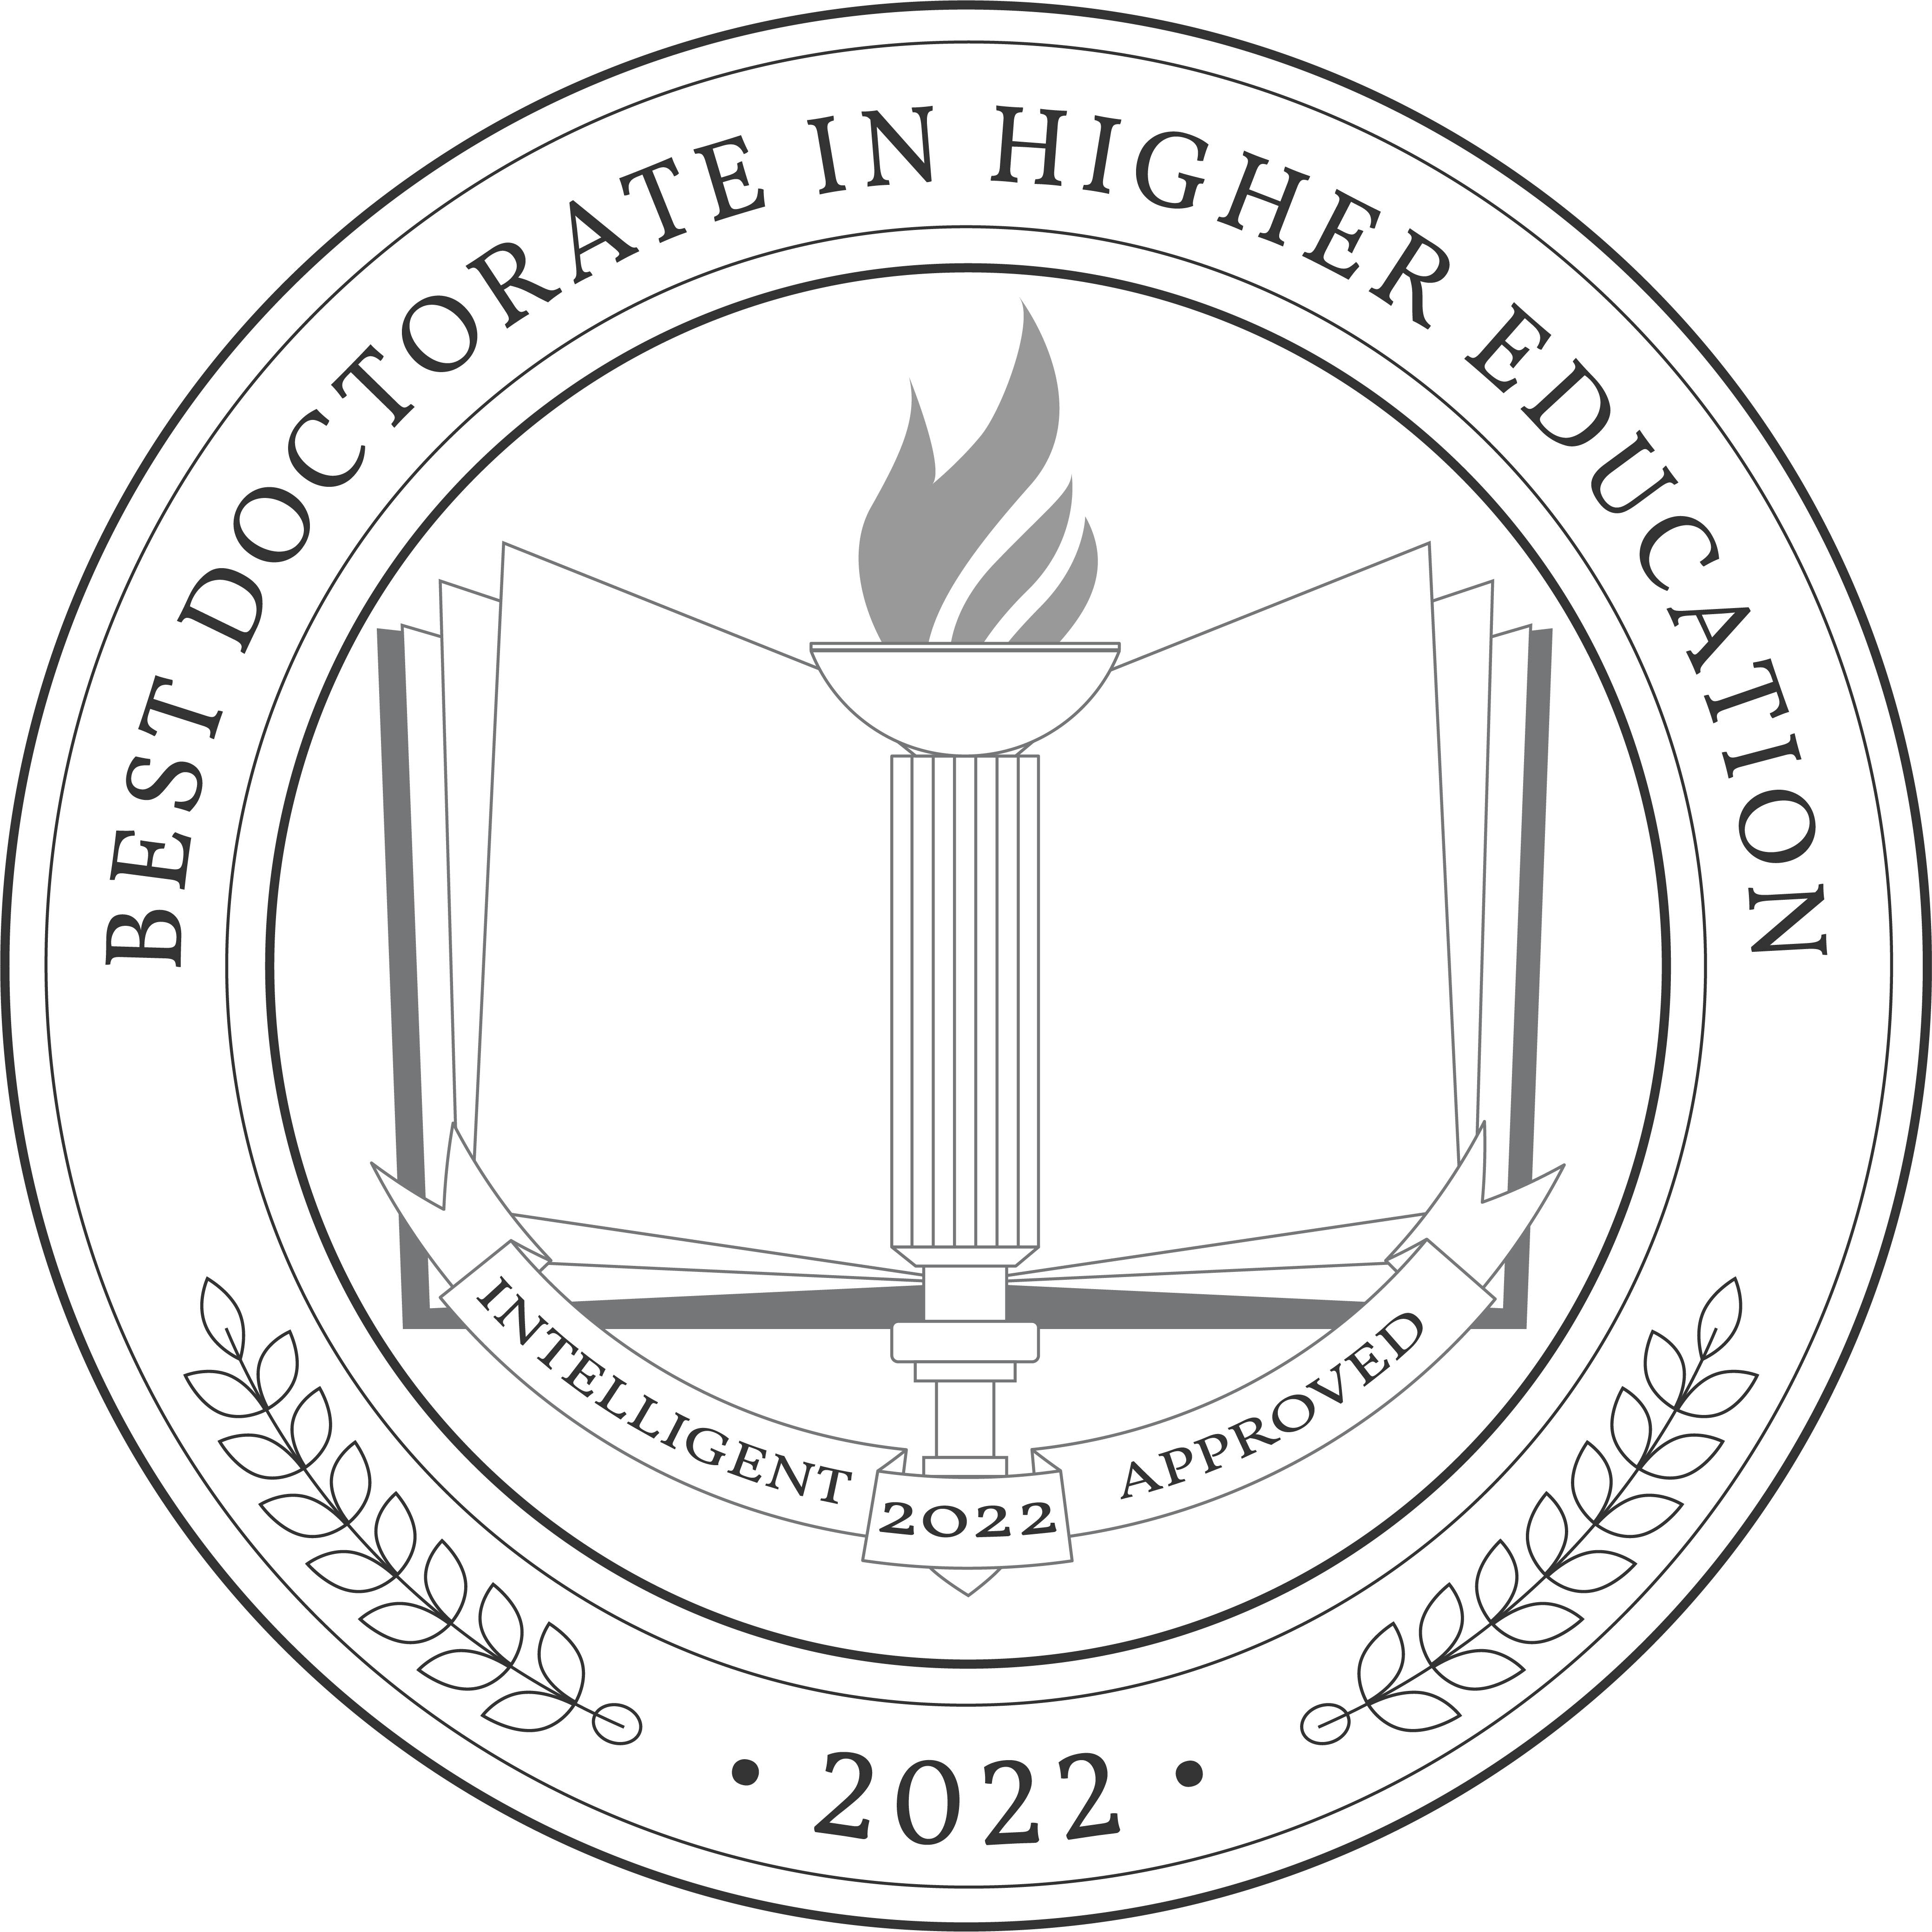 Best Doctorate in Higher Education Badge